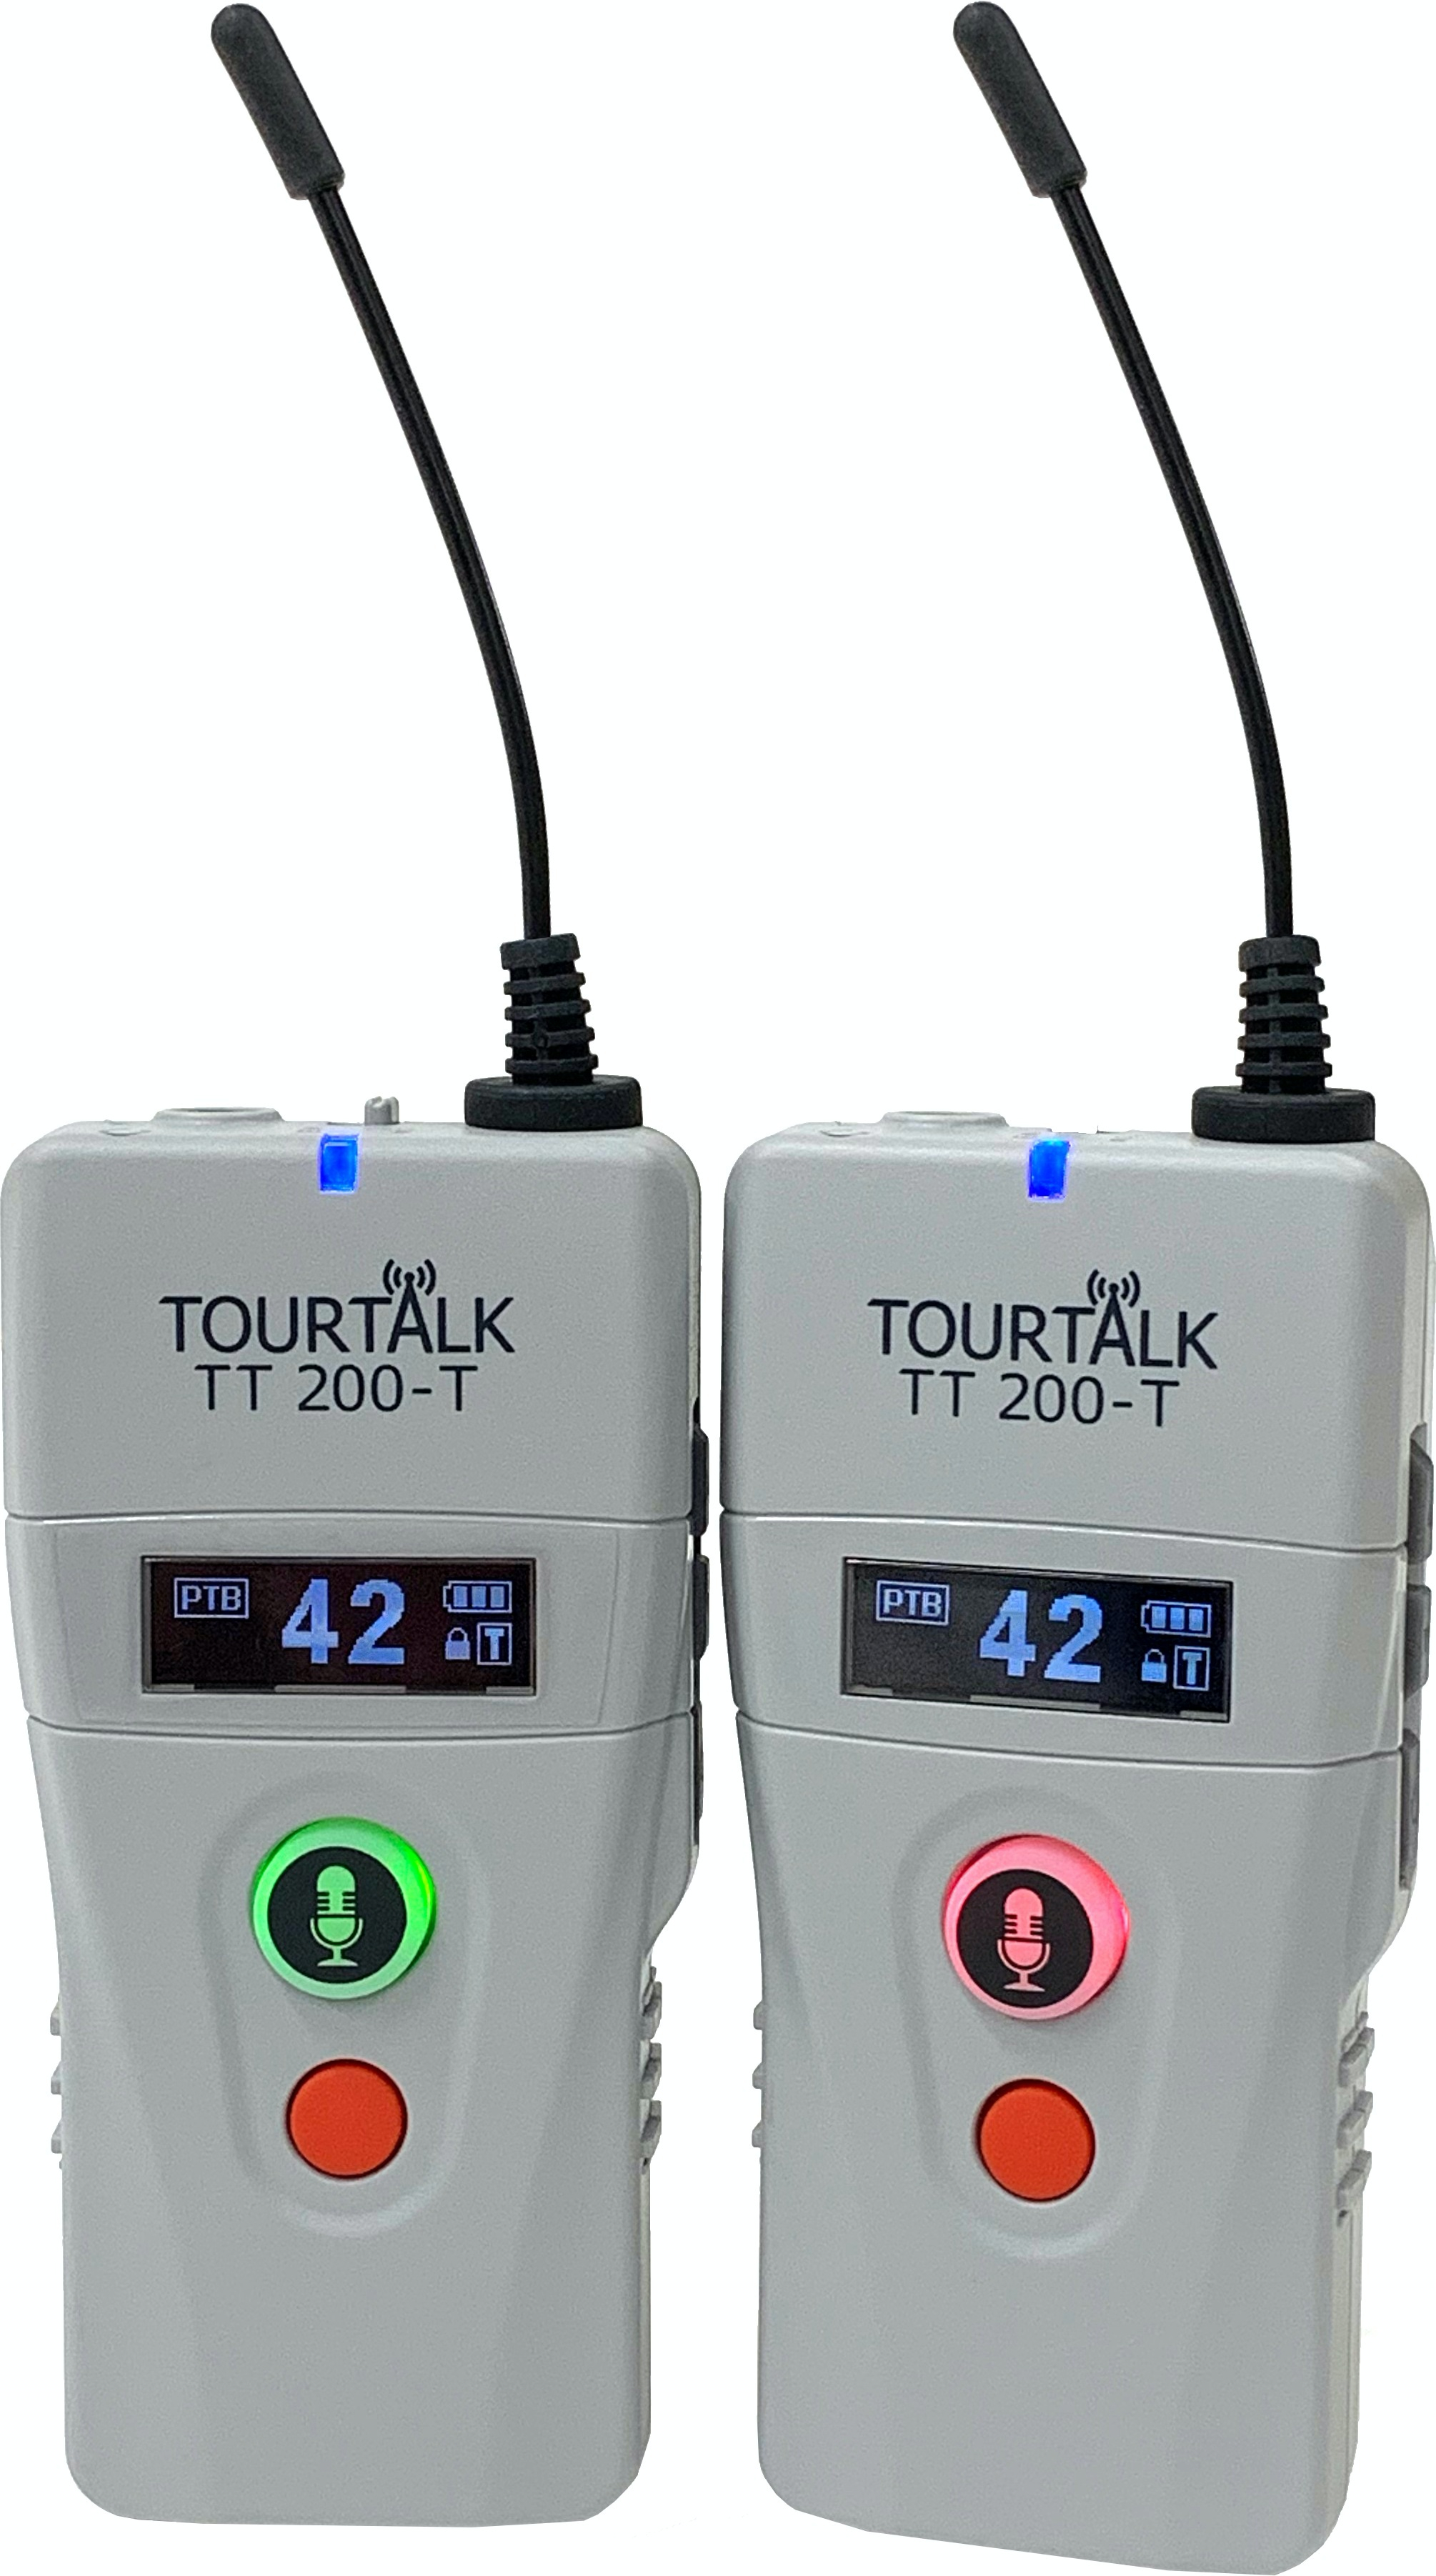 Tourtalk TT 200-T two-way tour guide system transmitter